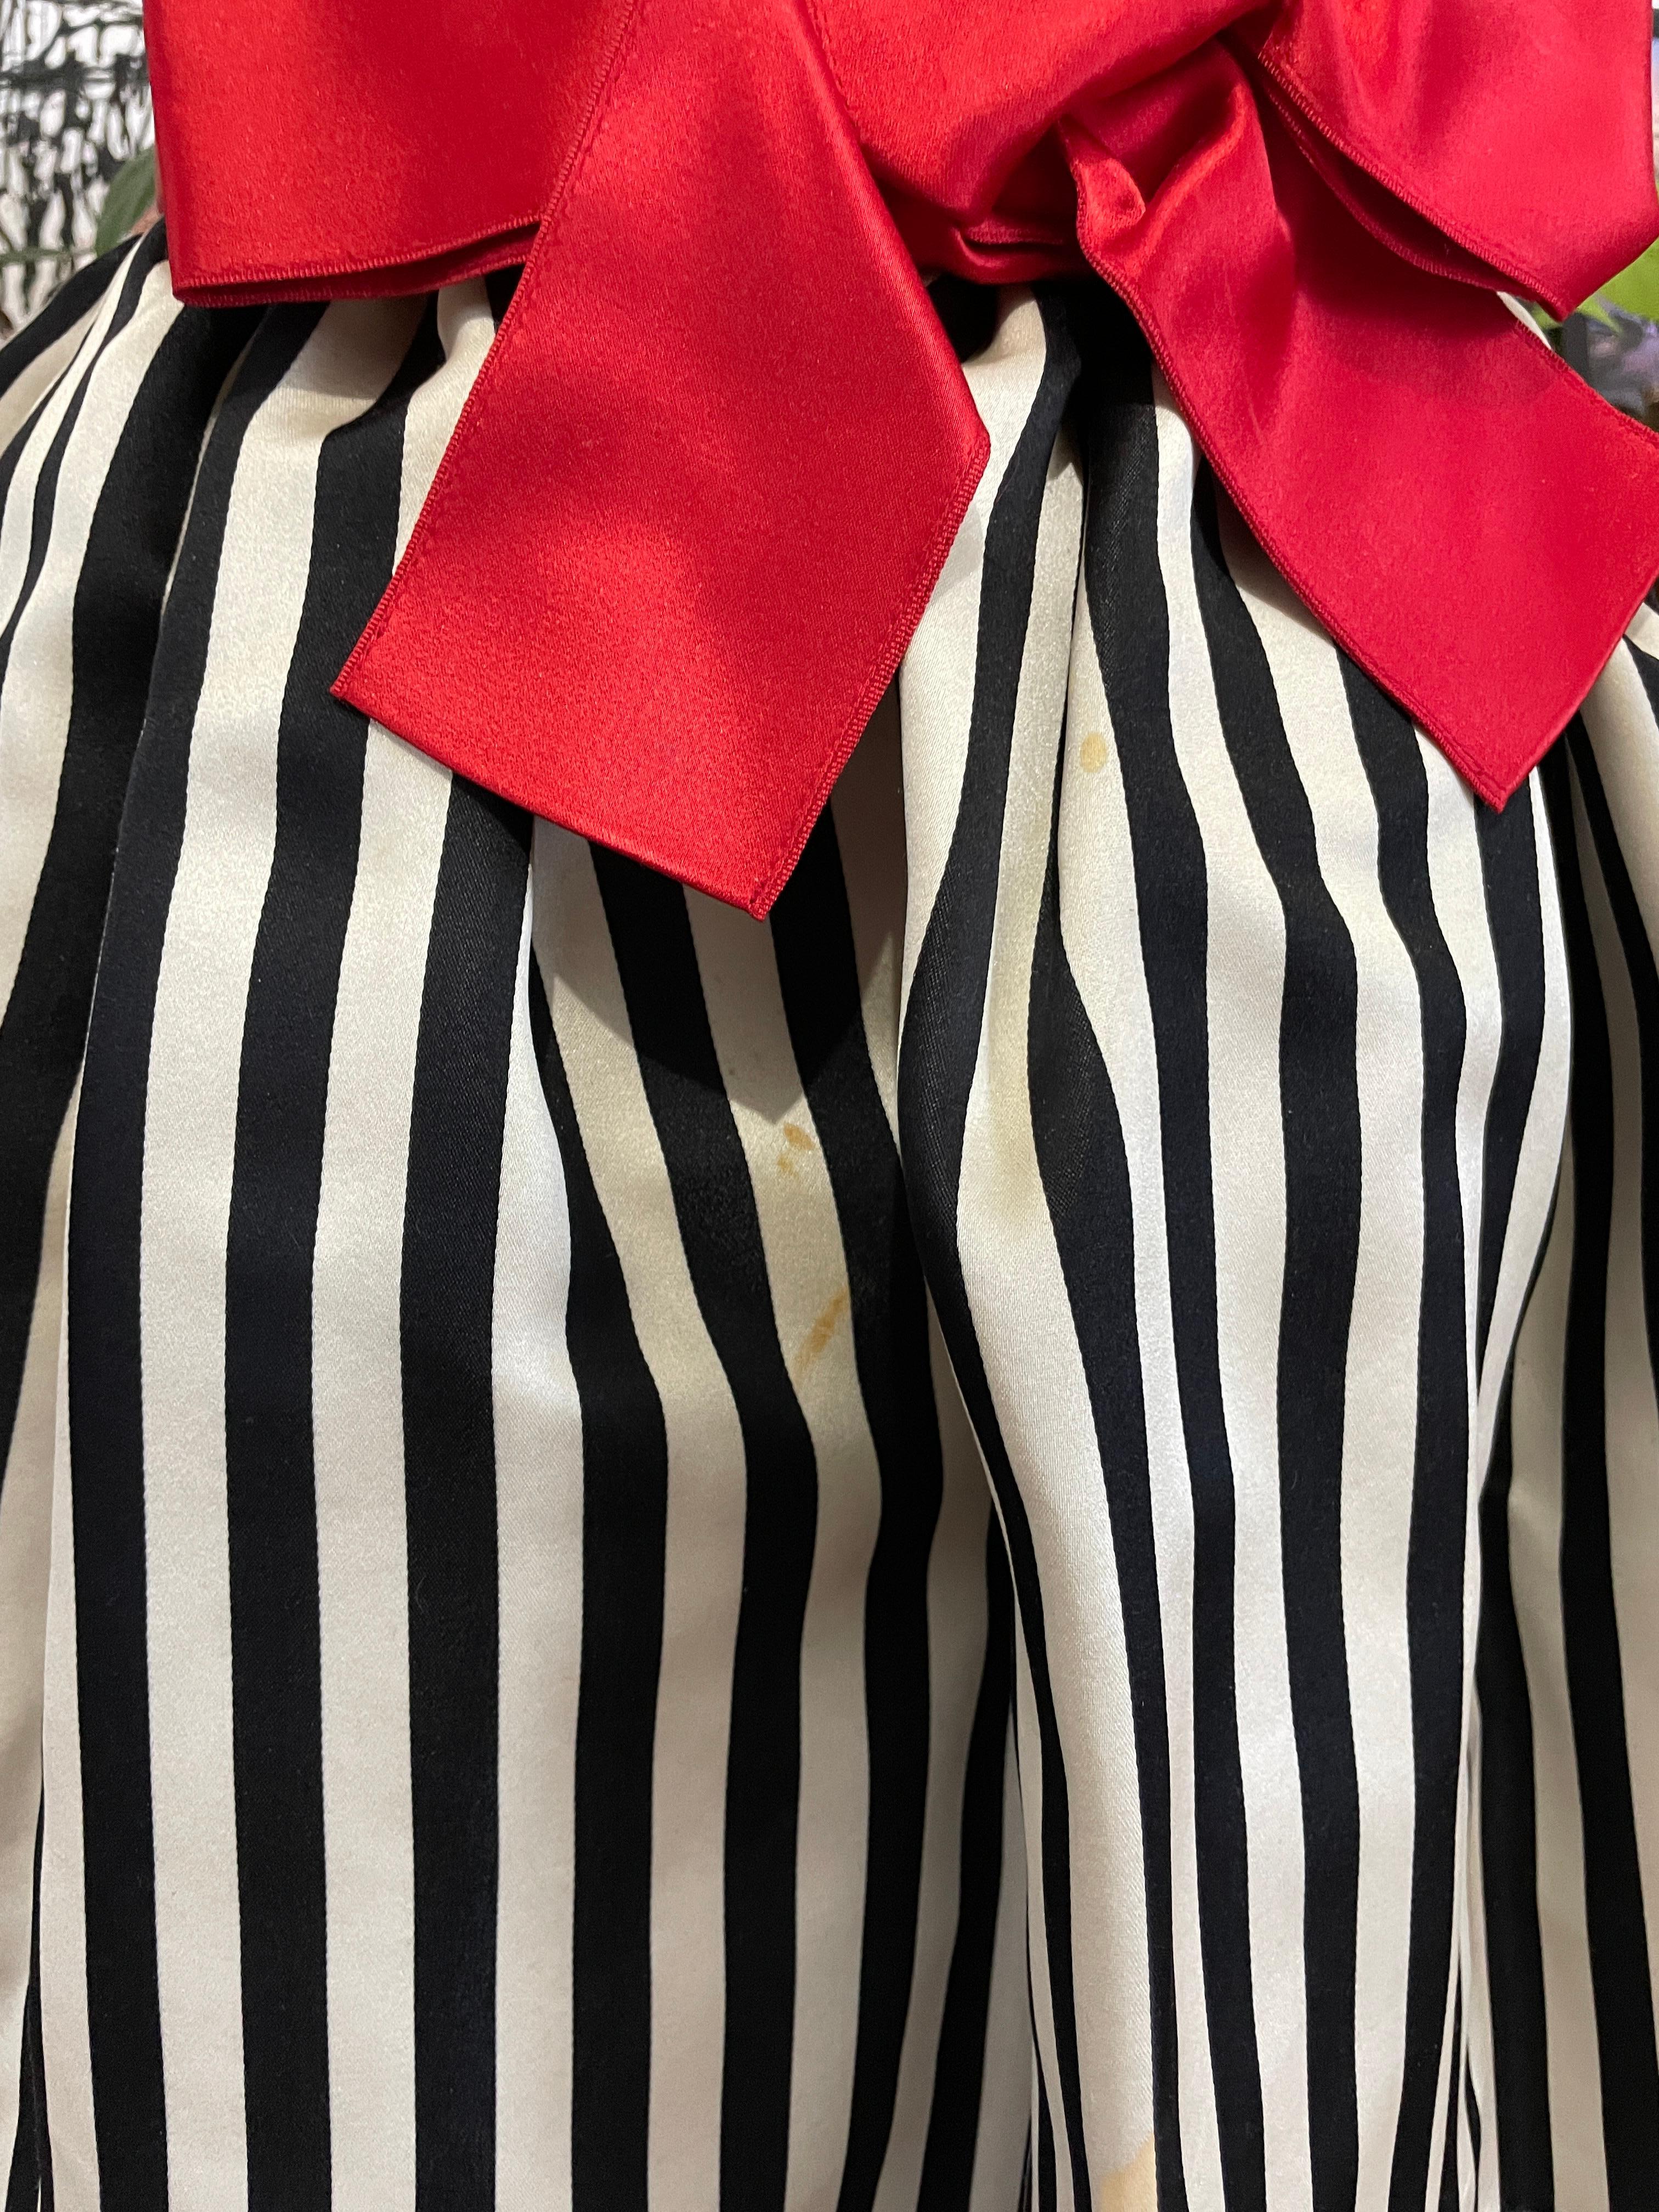 Bill Blass Black & White red striped baby doll dress W/ pockets, 1980s Size 4  For Sale 9